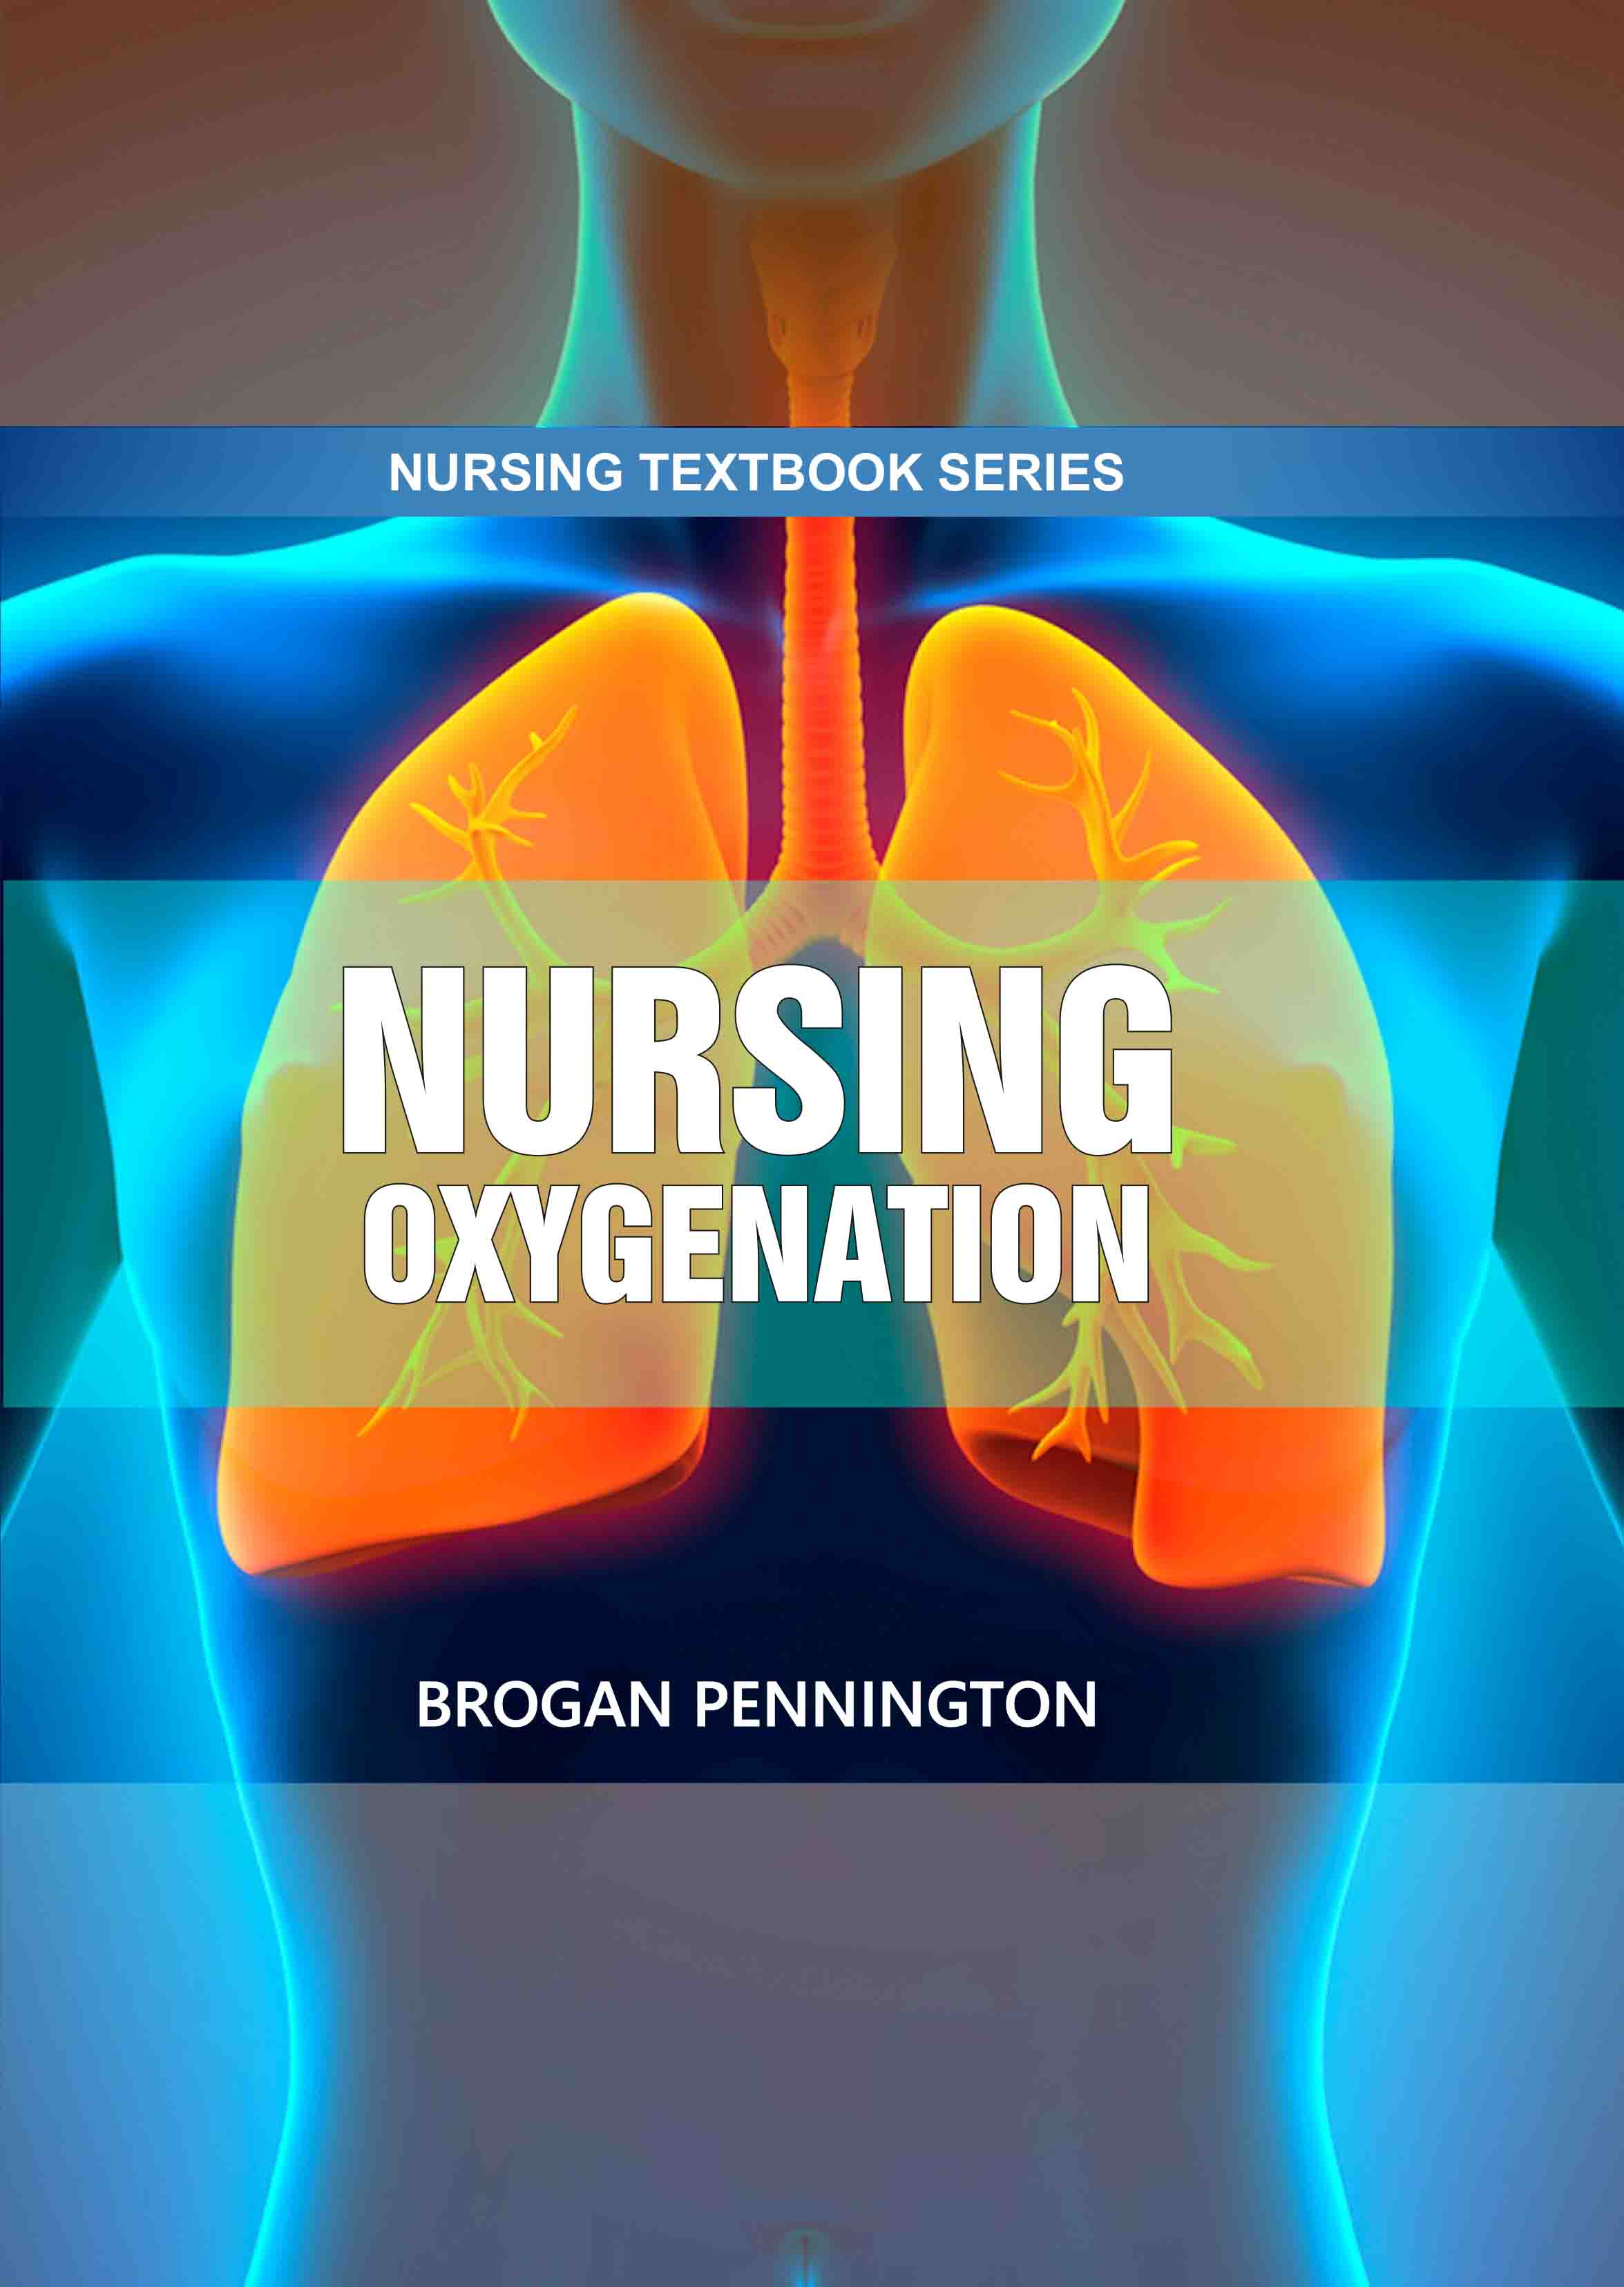 Nursing: Oxygenation